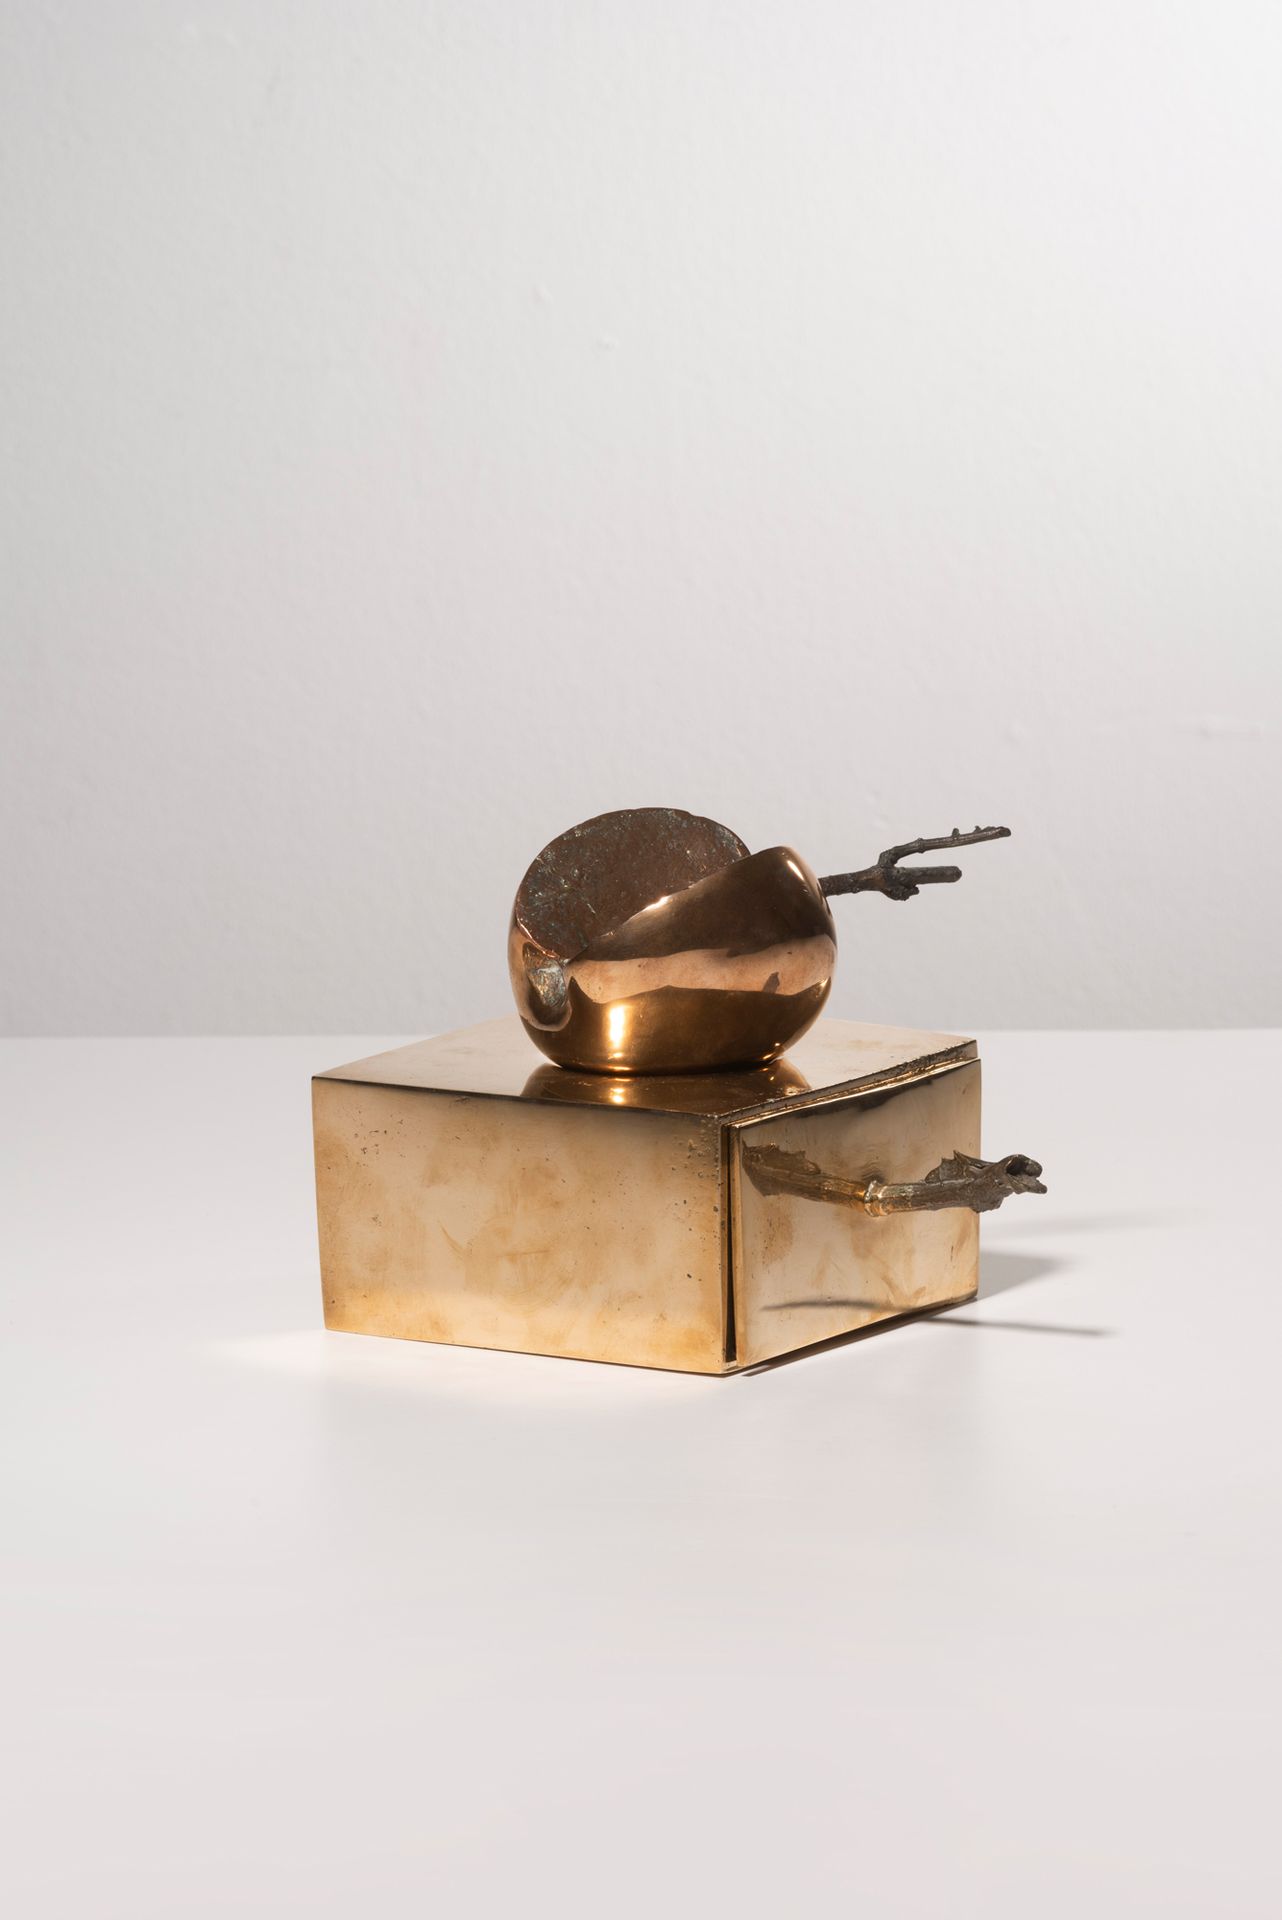 ALIK CAVALIERE (1926-1998) 苹果和抽屉，大约在1968年
带有金色和棕色铜锈的青铜。
抽屉上有签名和编号11。
Brons met g&hellip;